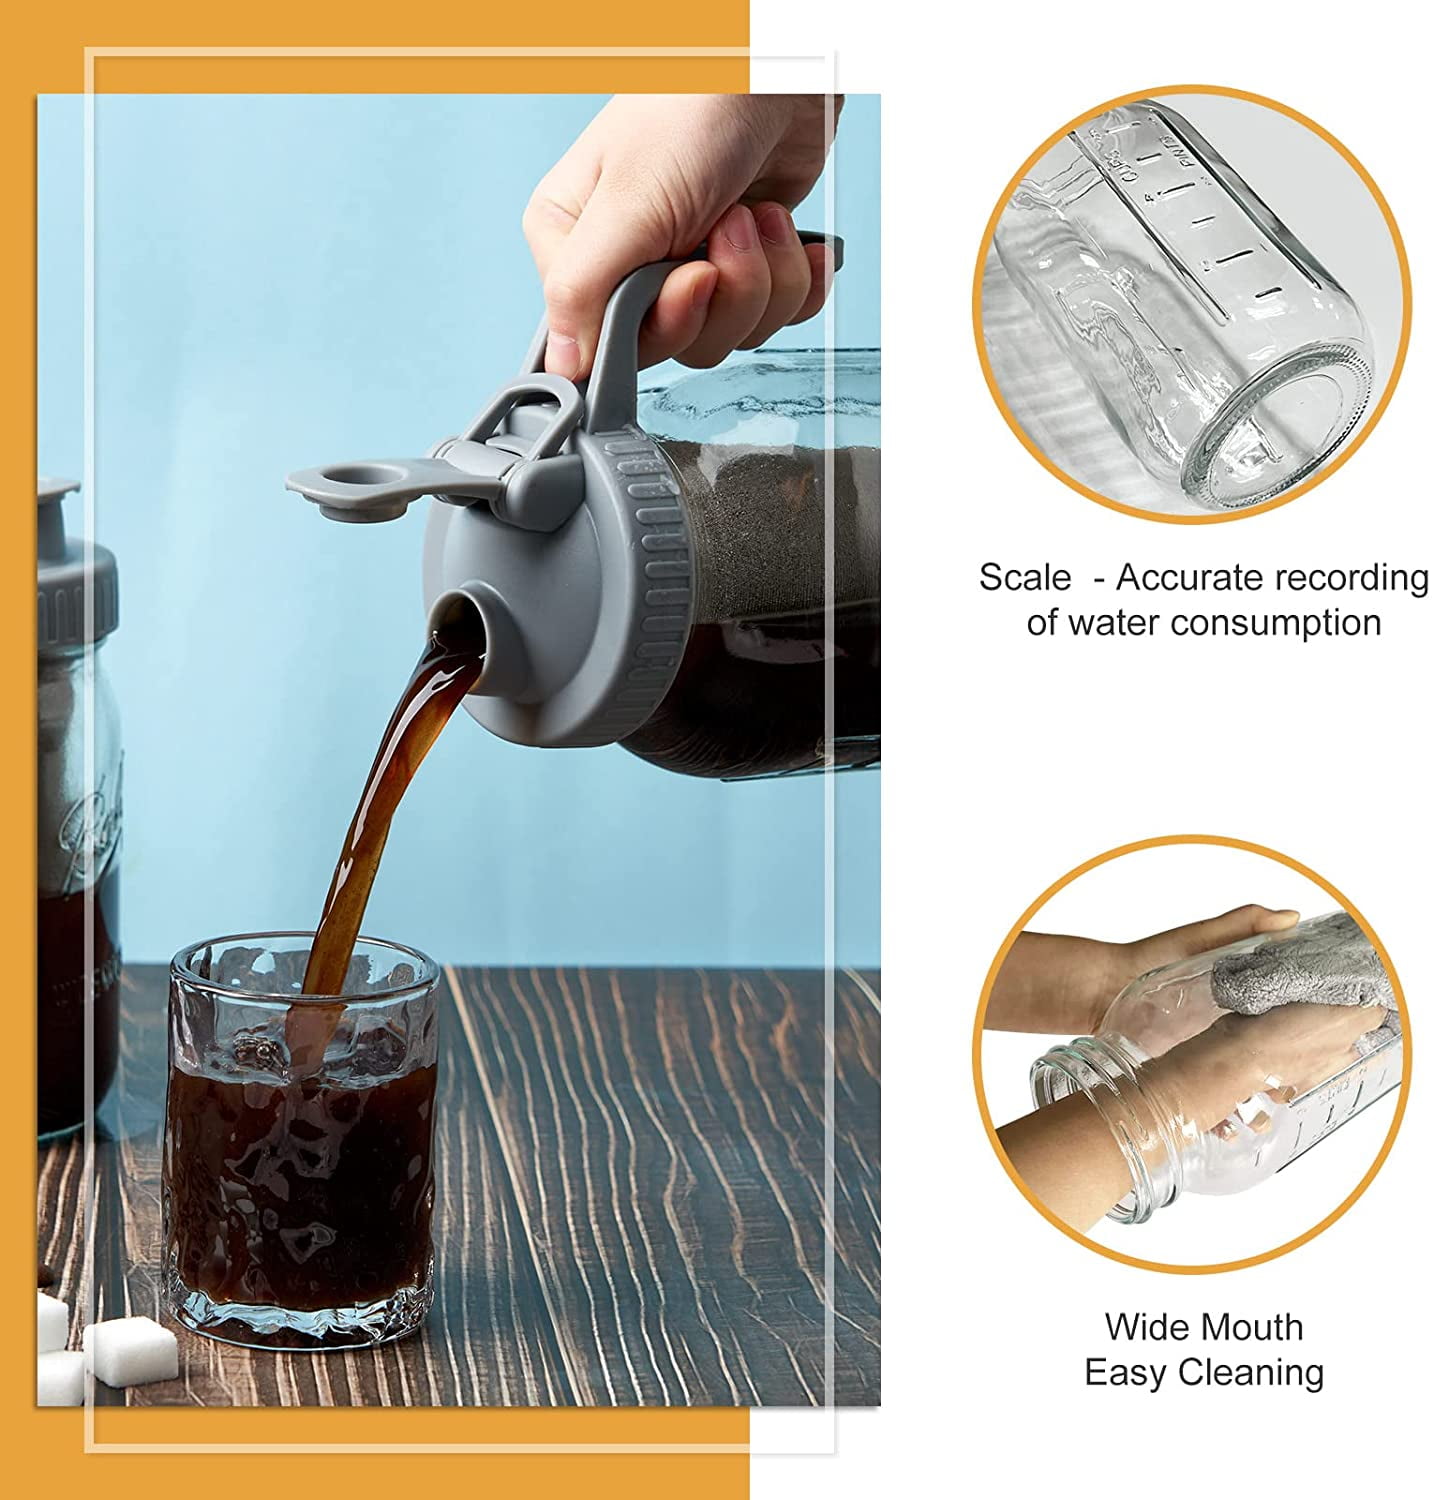 Cold Brew Coffee Maker Jar - 64oz Thick Glass Multipurpose Mason